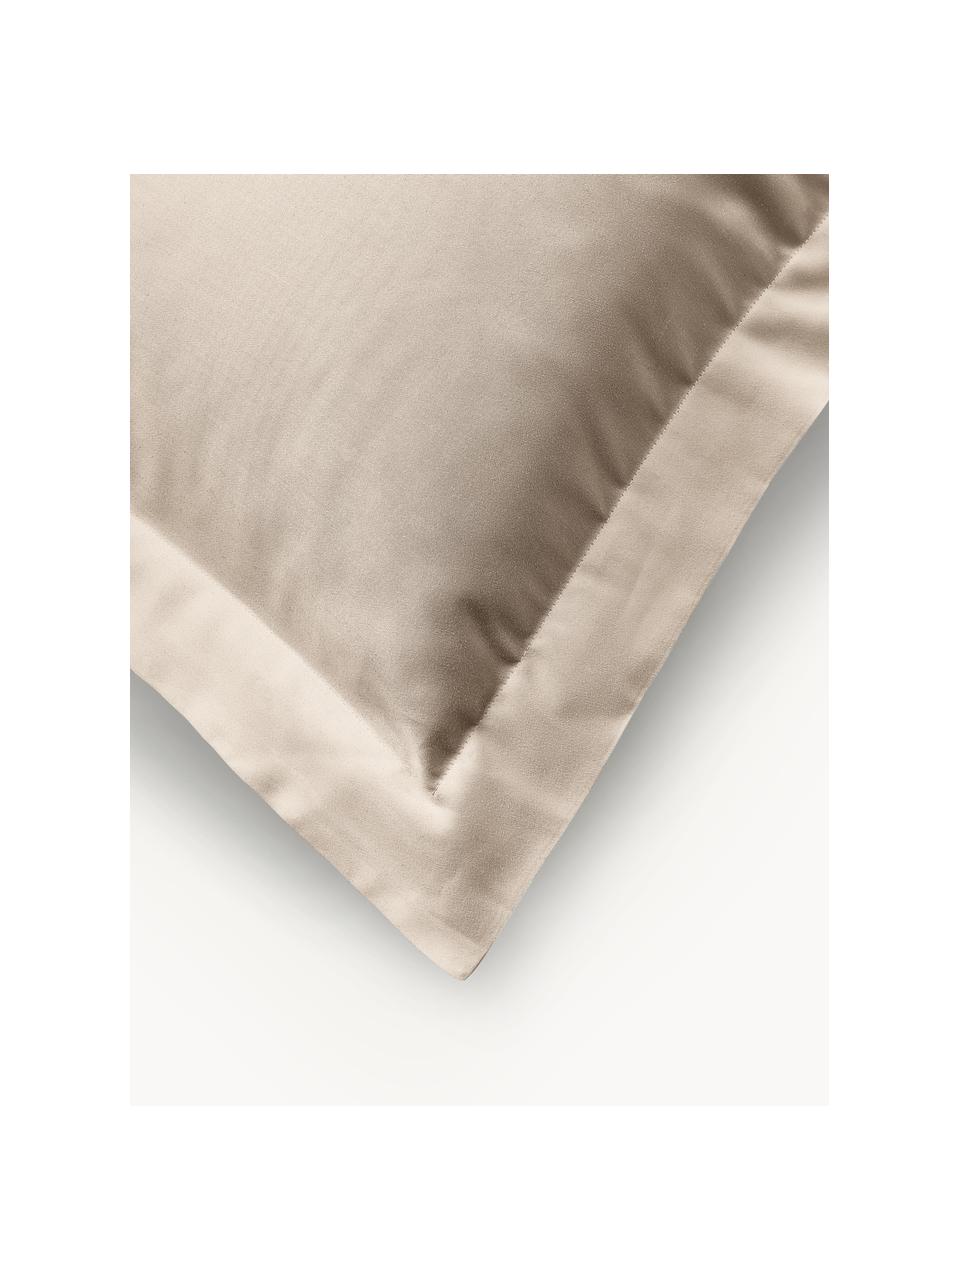 Funda de almohada de satén Premium, Beige, An 45 x L 110 cm